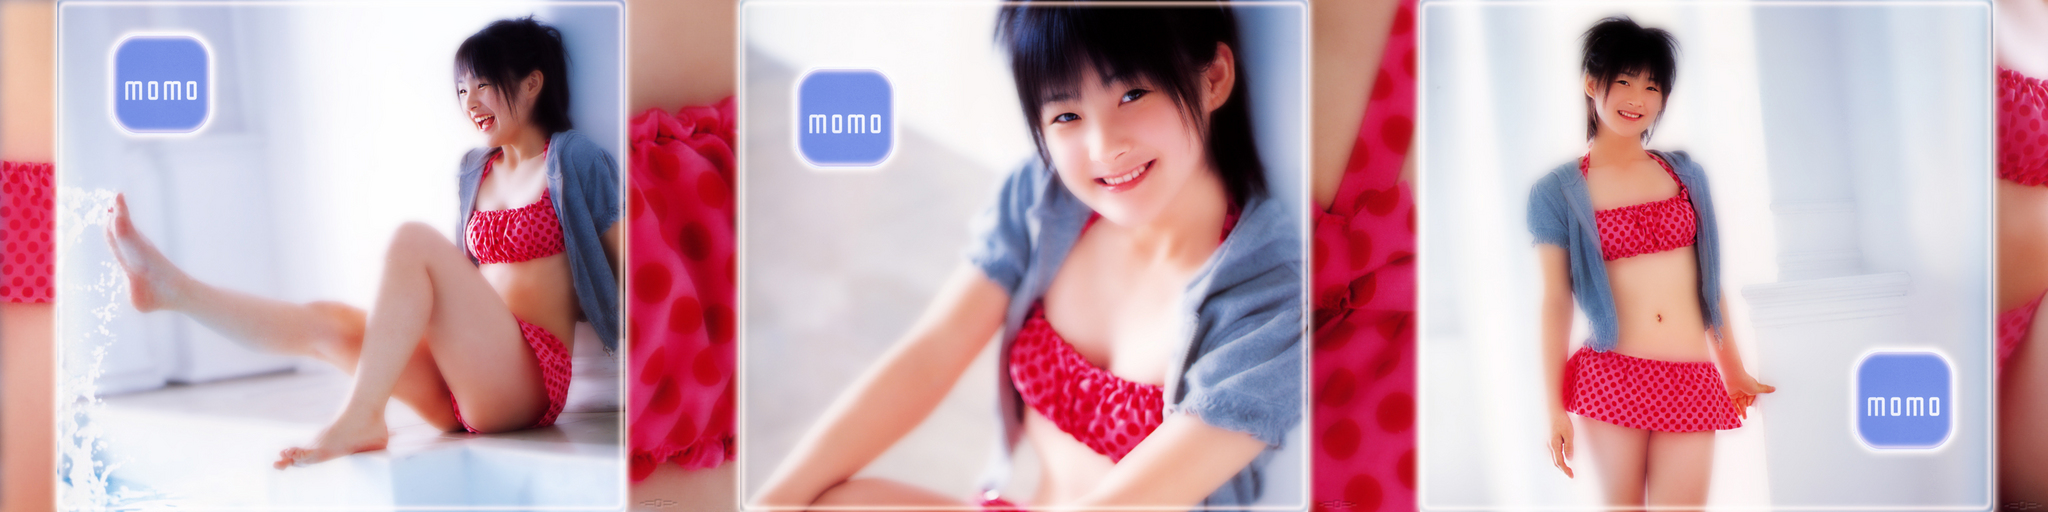 Momo-PolkaDot.jpg